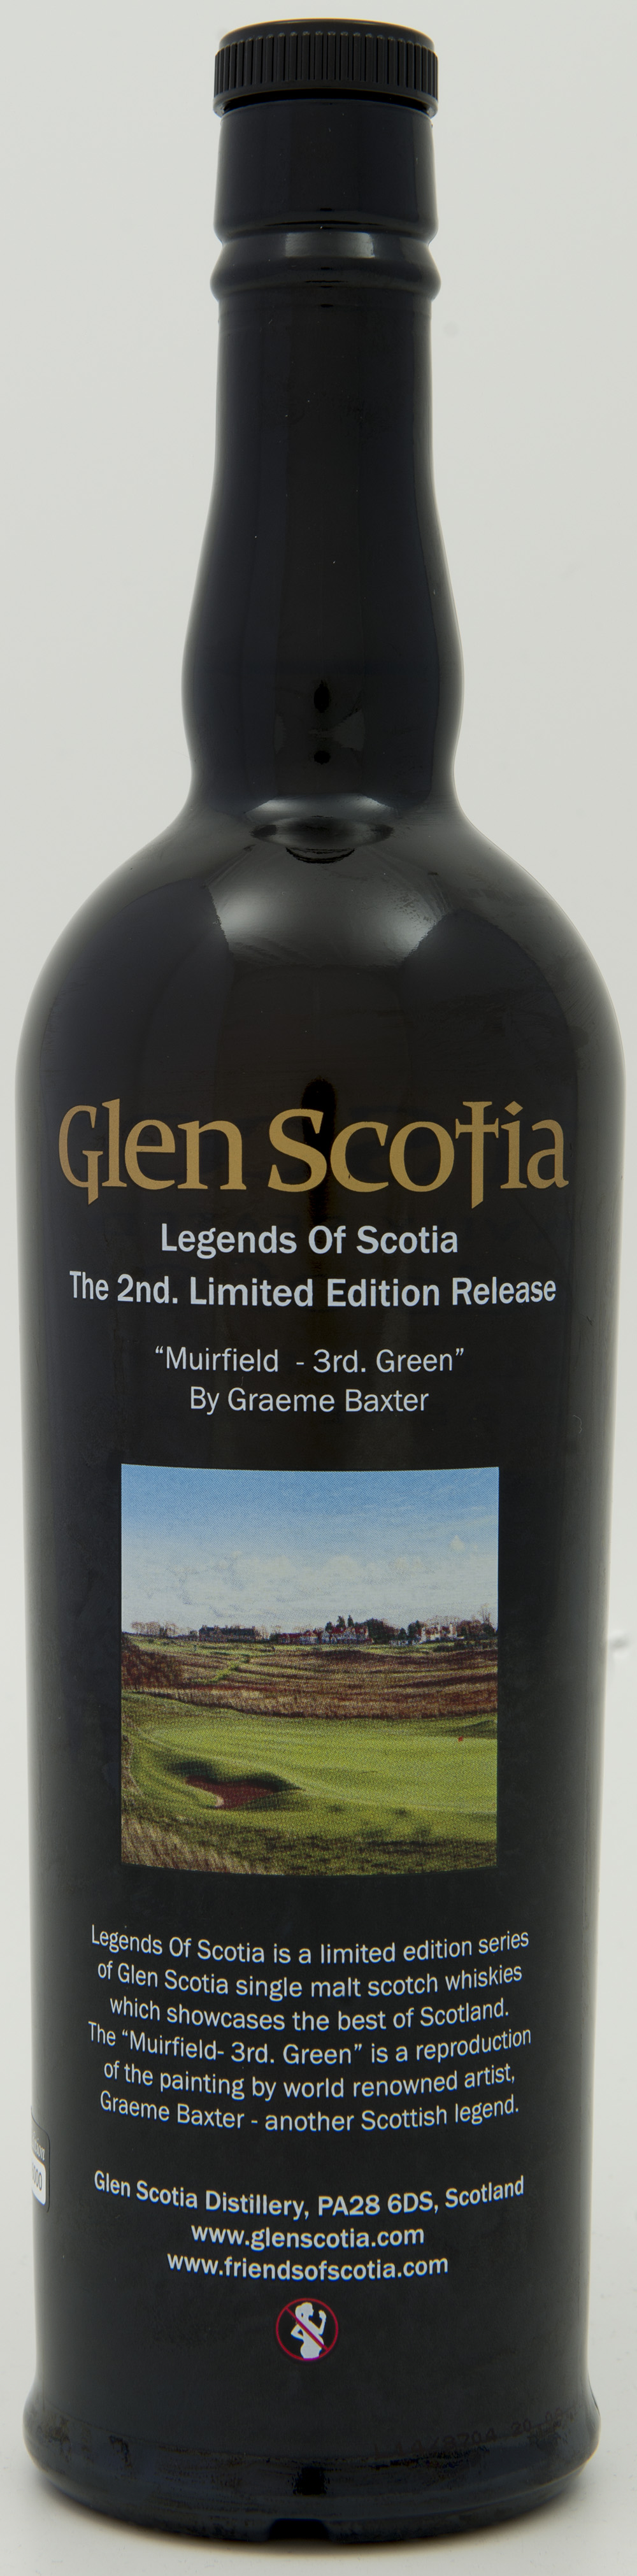 Billede: DSC_8221 - Glen Scotia - Heavily Peated - Legends of Scotia - bottle back.jpg